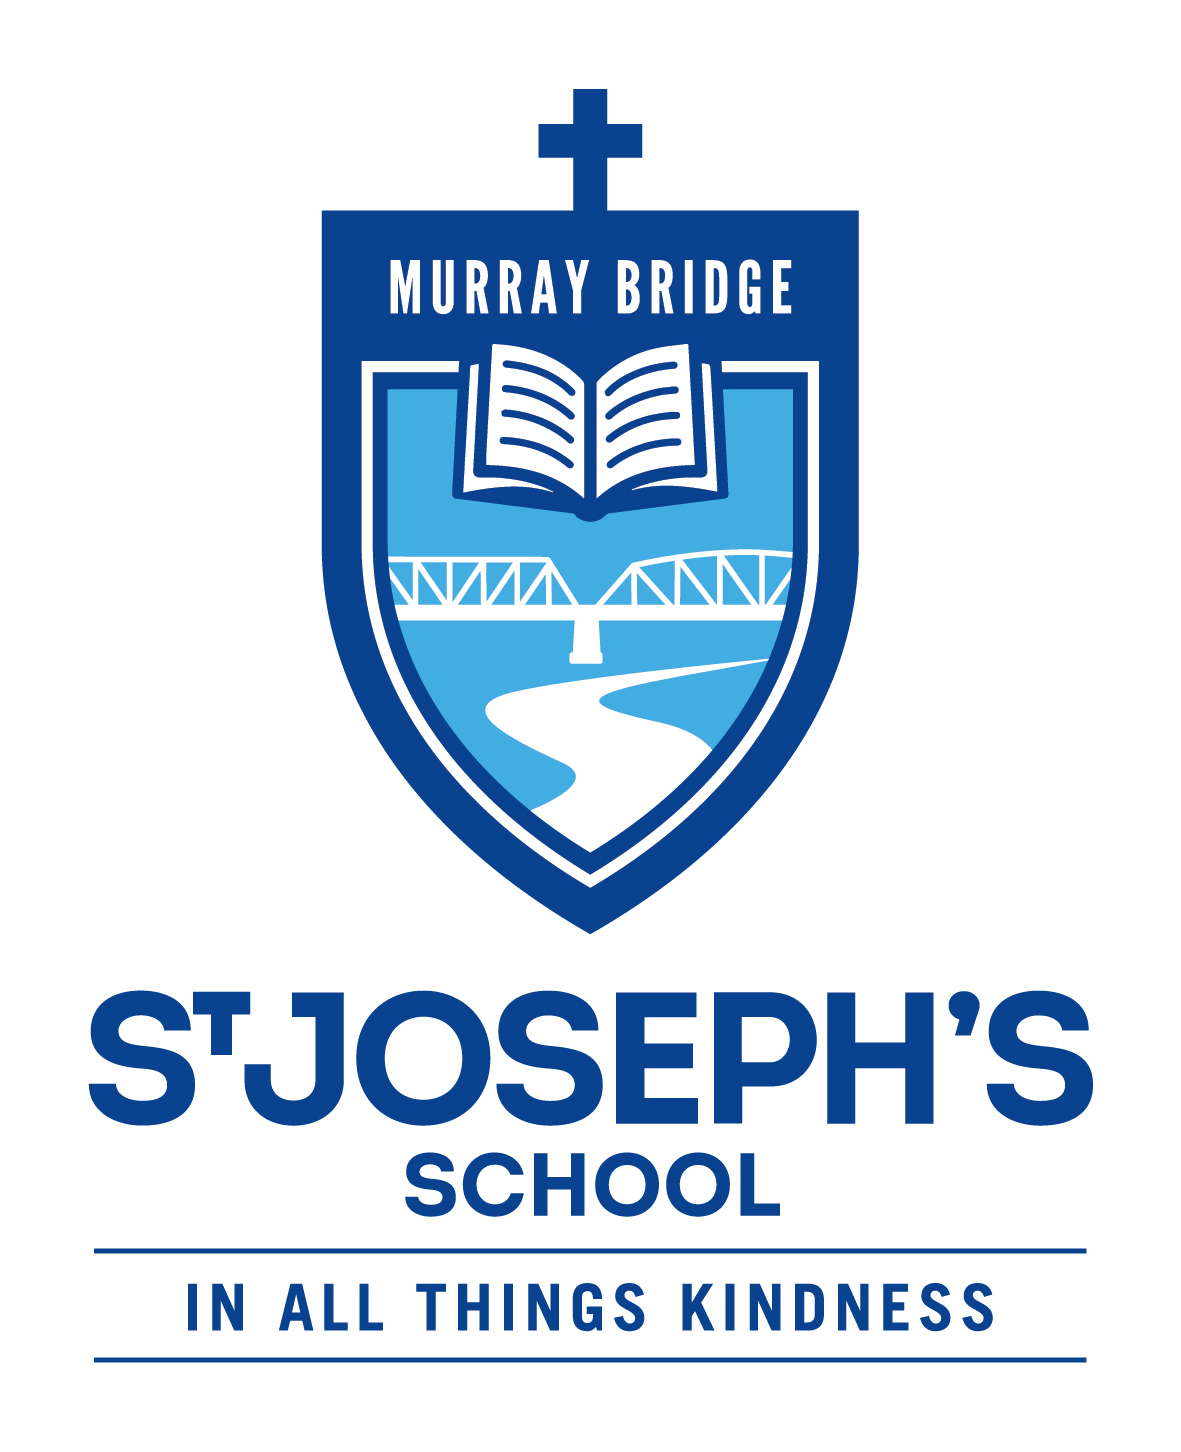 St Joseph's School, Murray Bridge